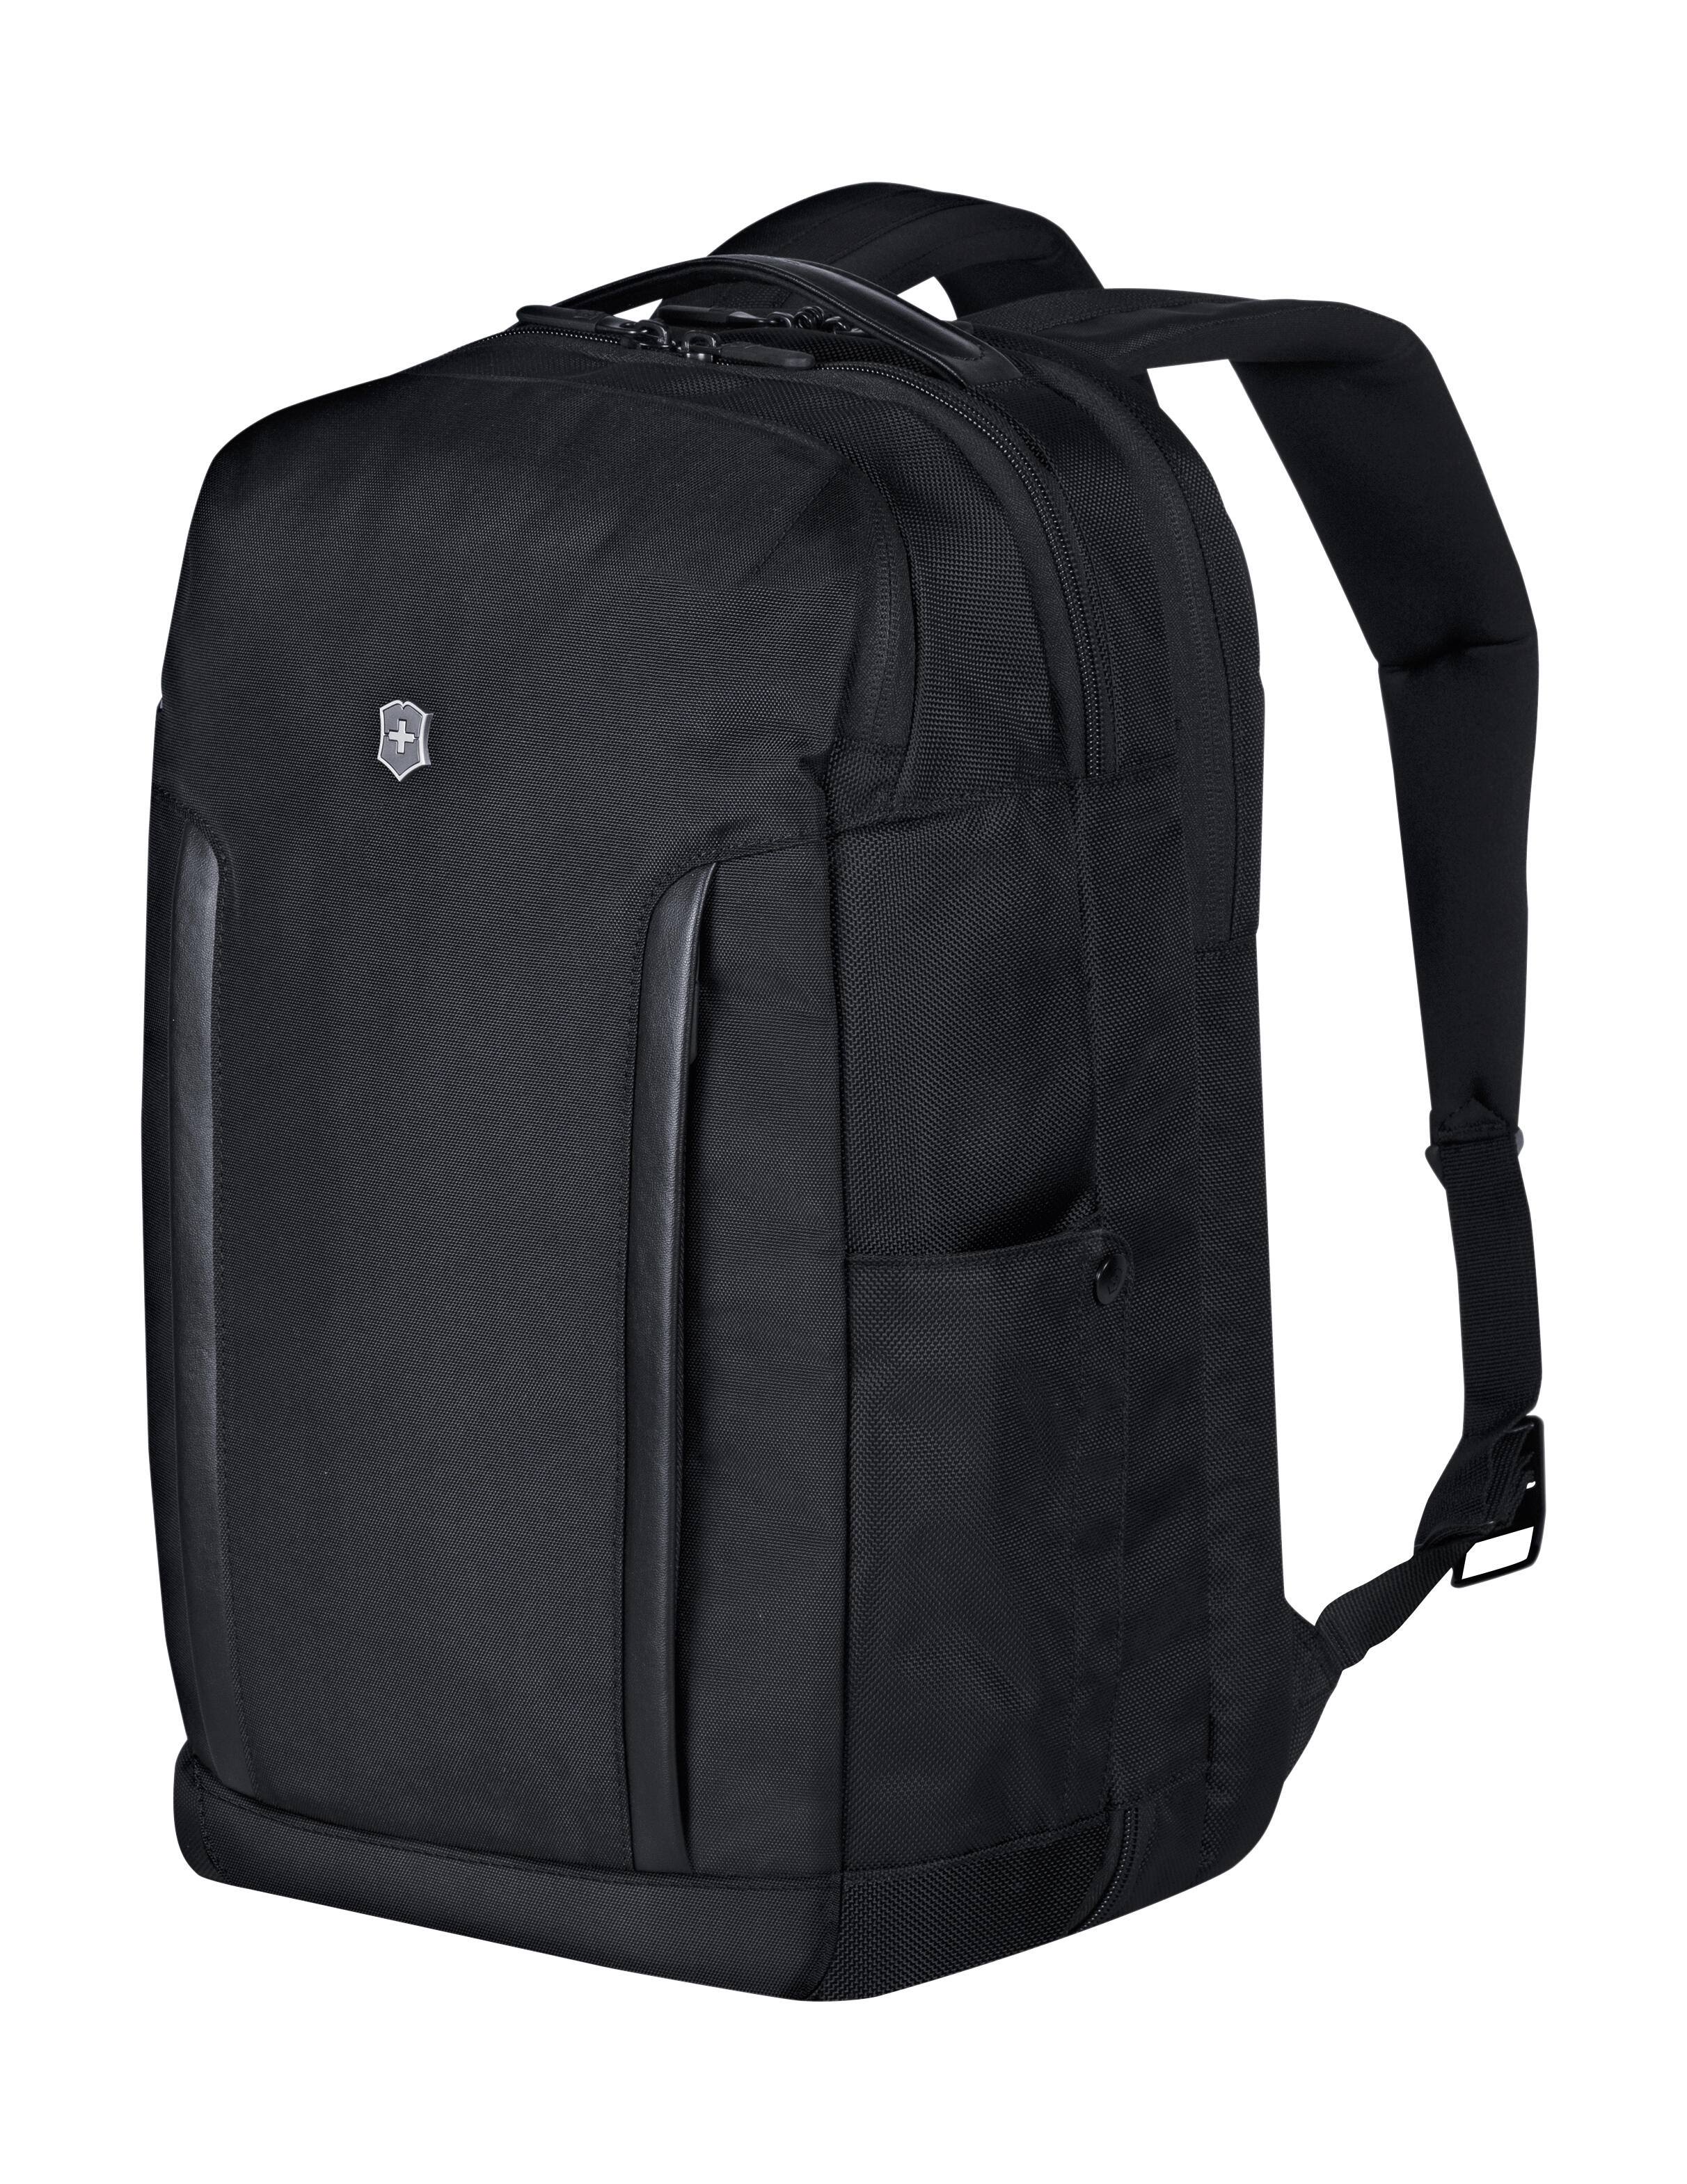 Victorinox Altmont Professional Deluxe Travel Laptop Backpack - 15", Black